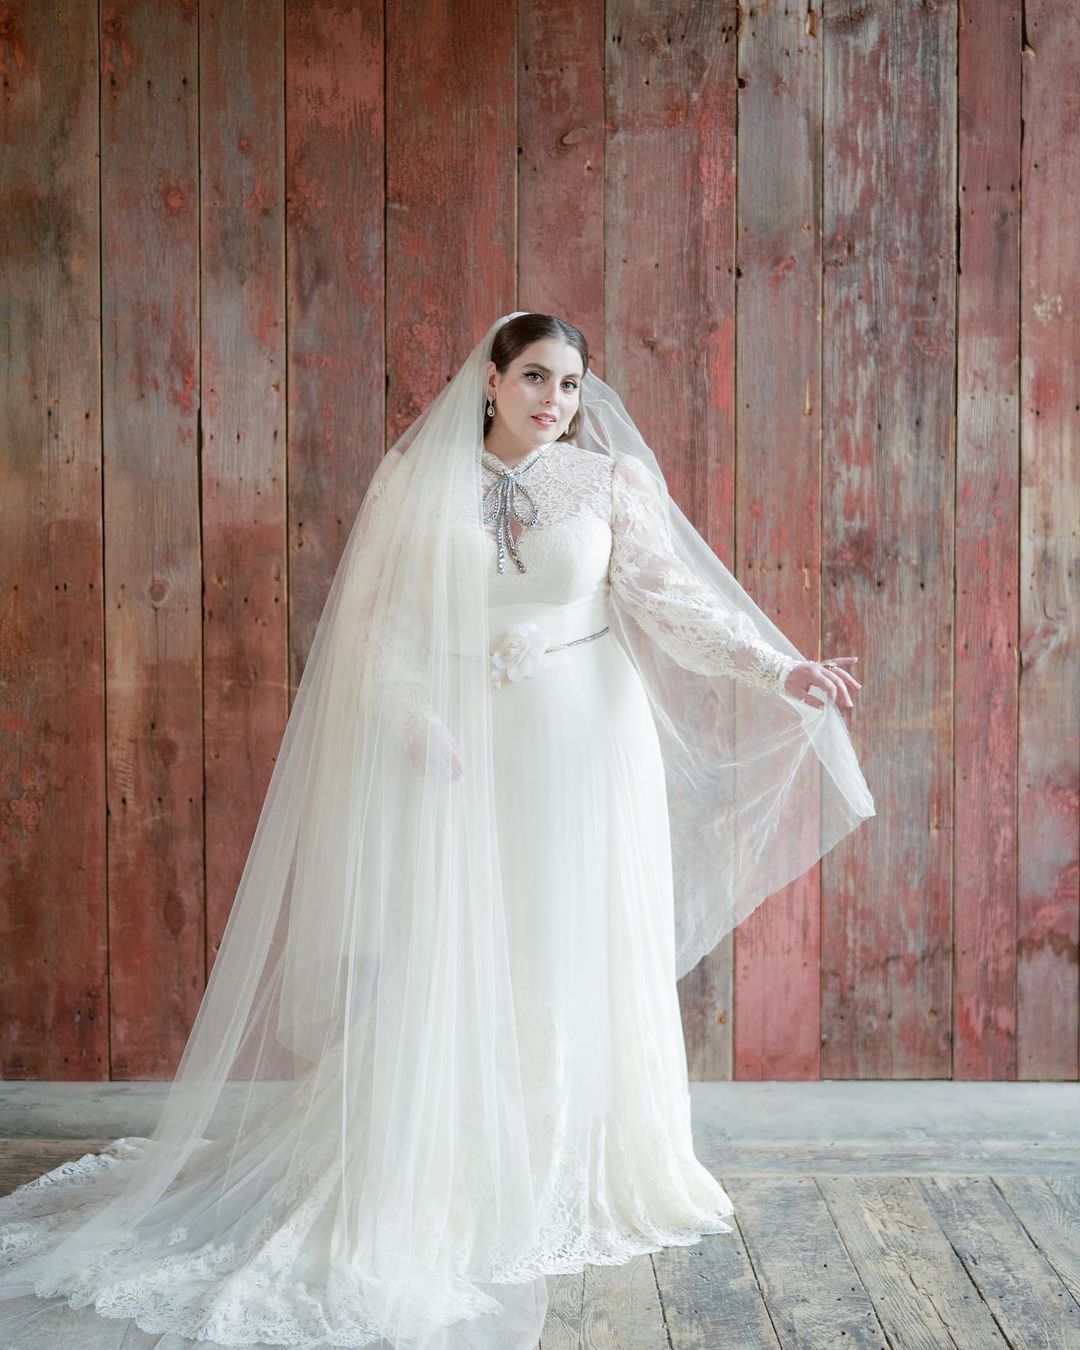 Beanie Feldstein's Gucci wedding dress